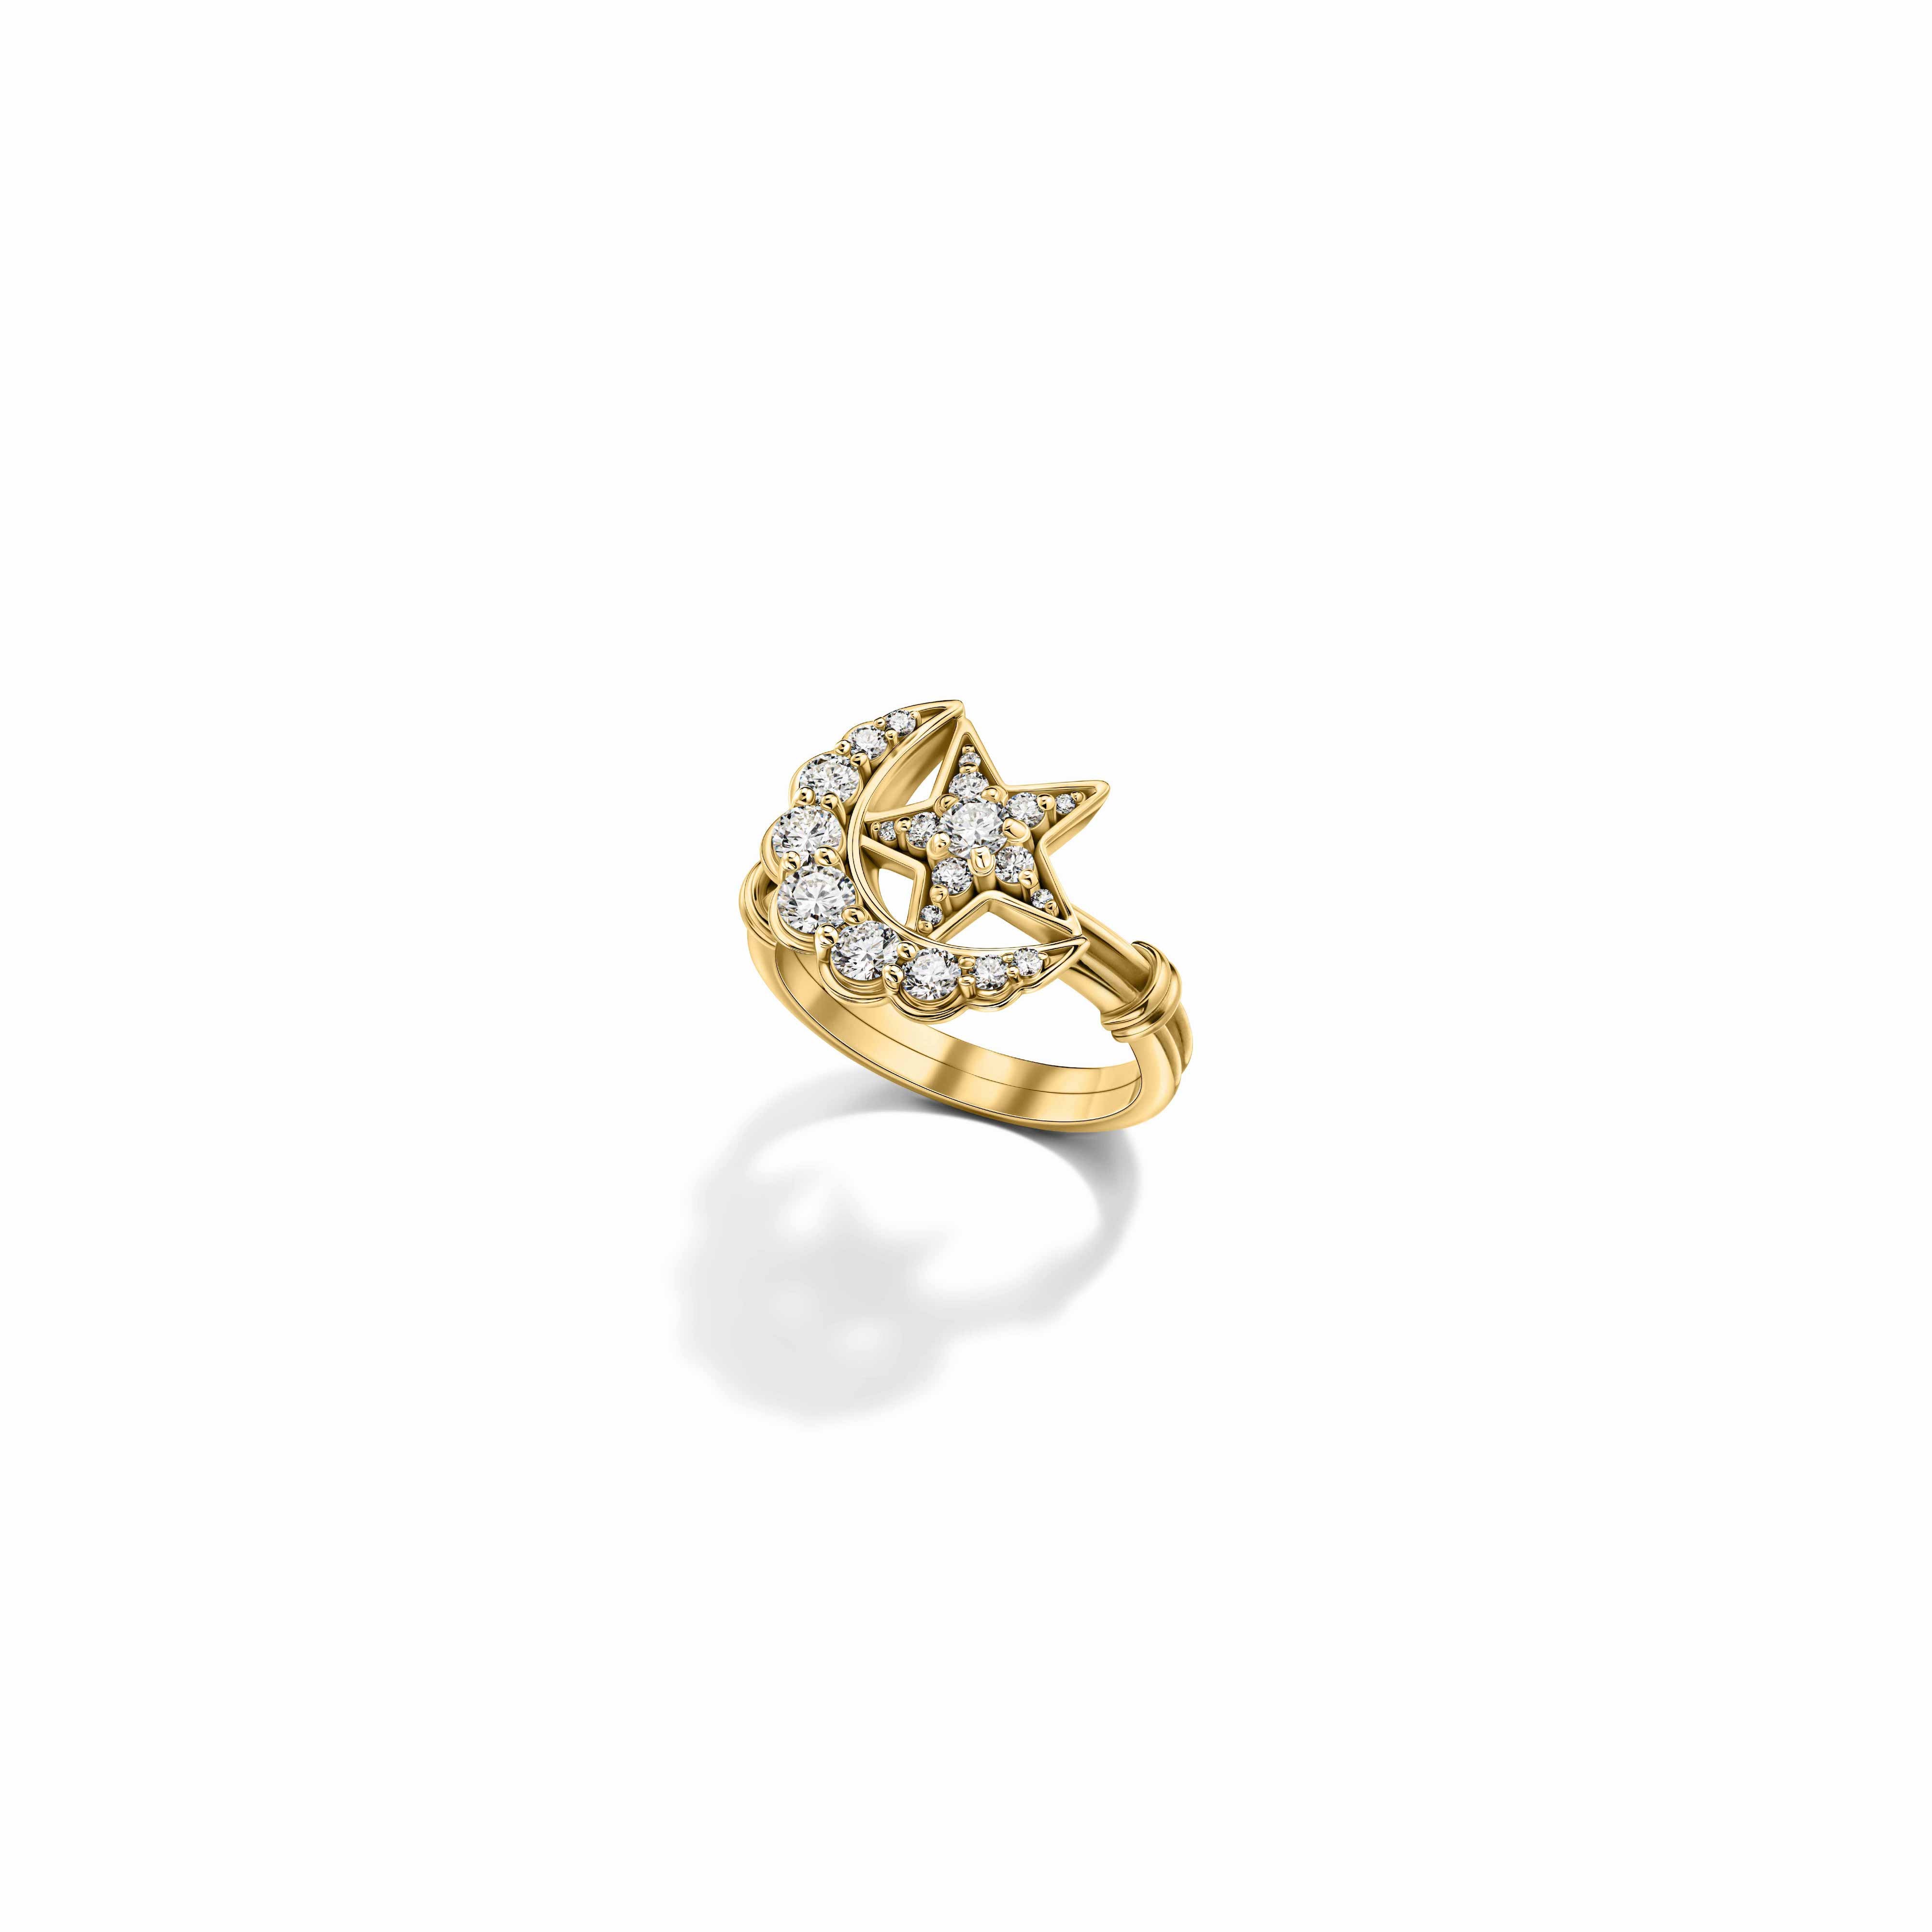 Ottoman Diamond Ring by Azza Fahmy - Designer Rings